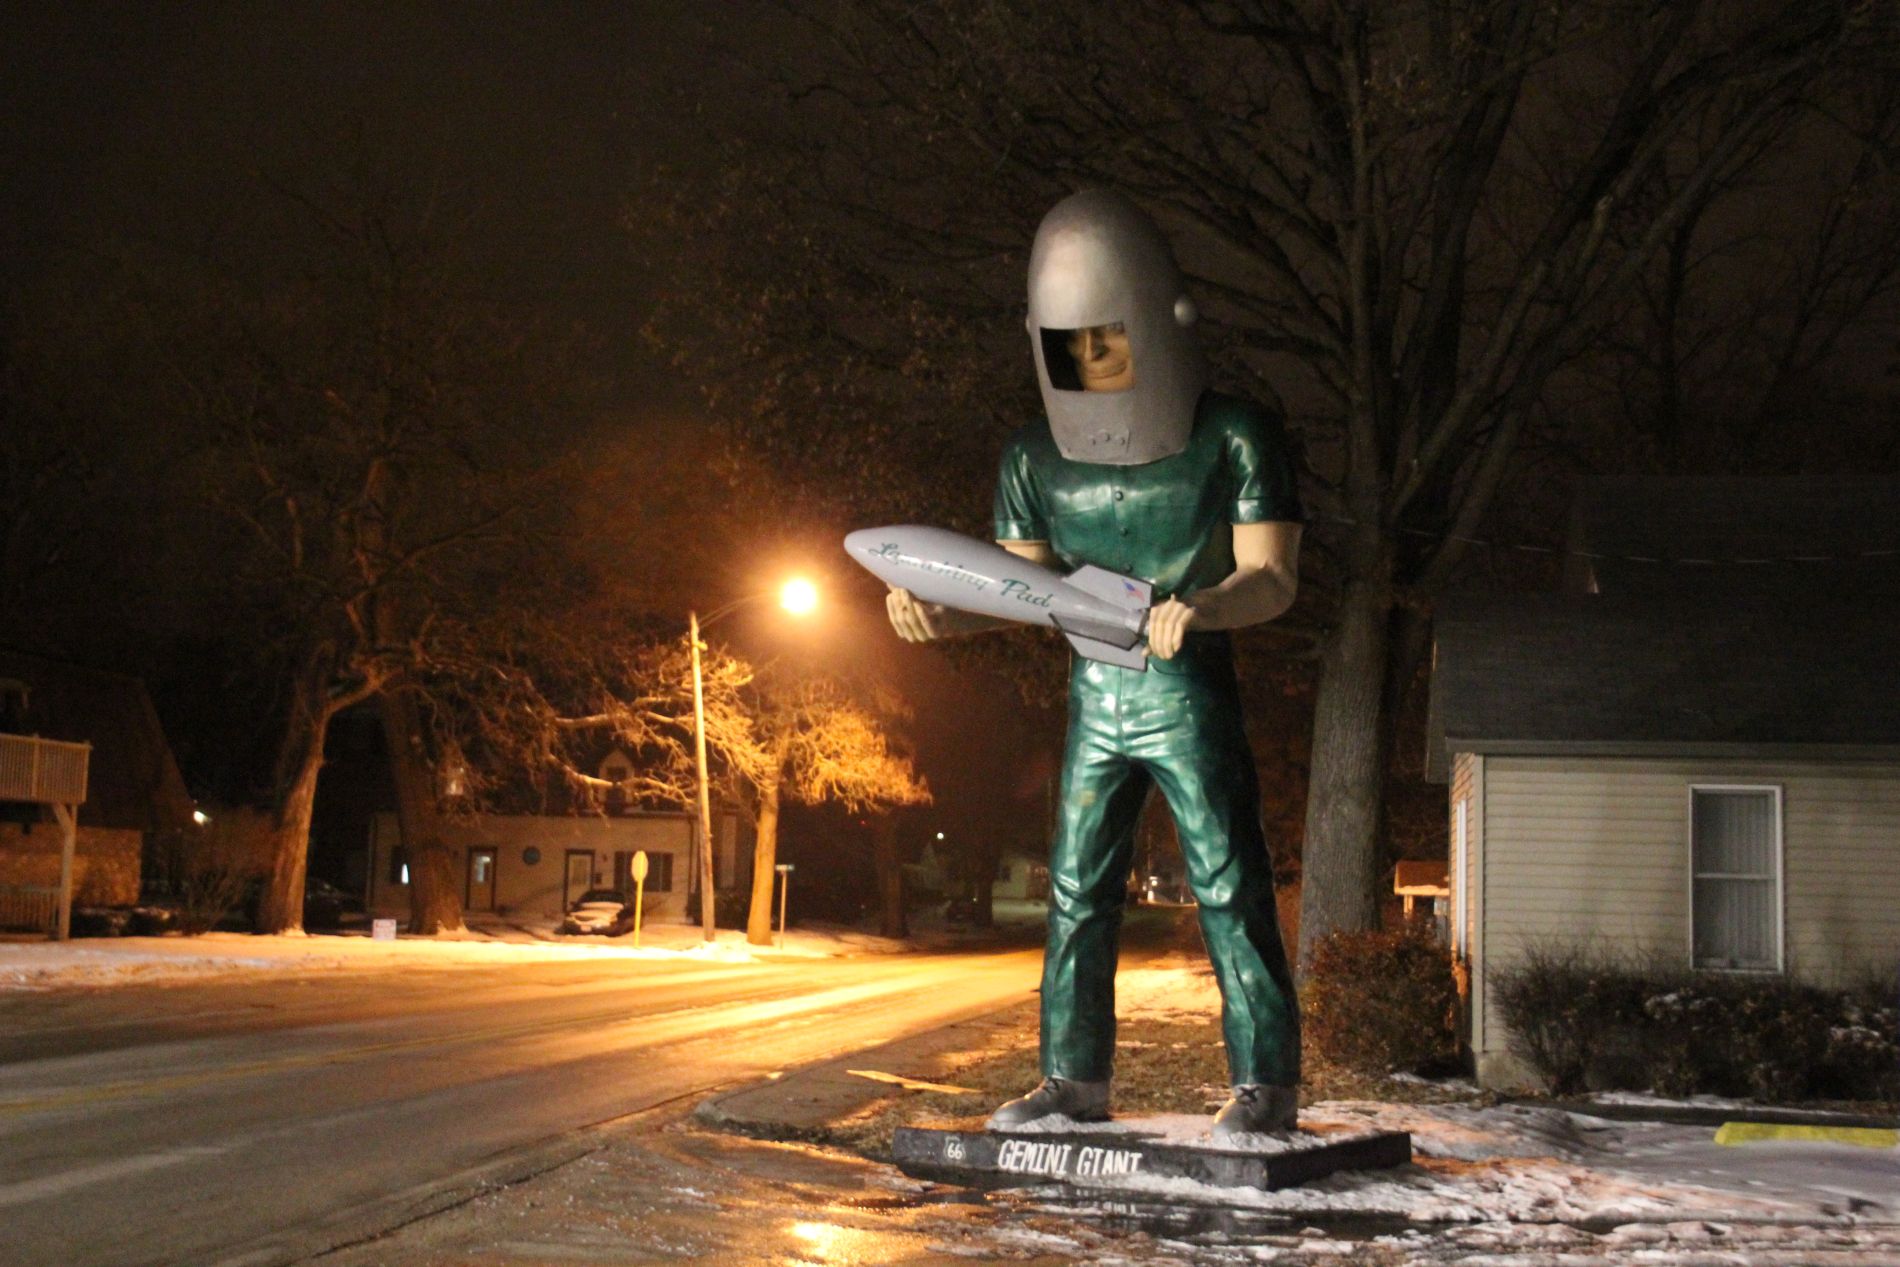 Gemini Giant statue in Wilmington, Illinois